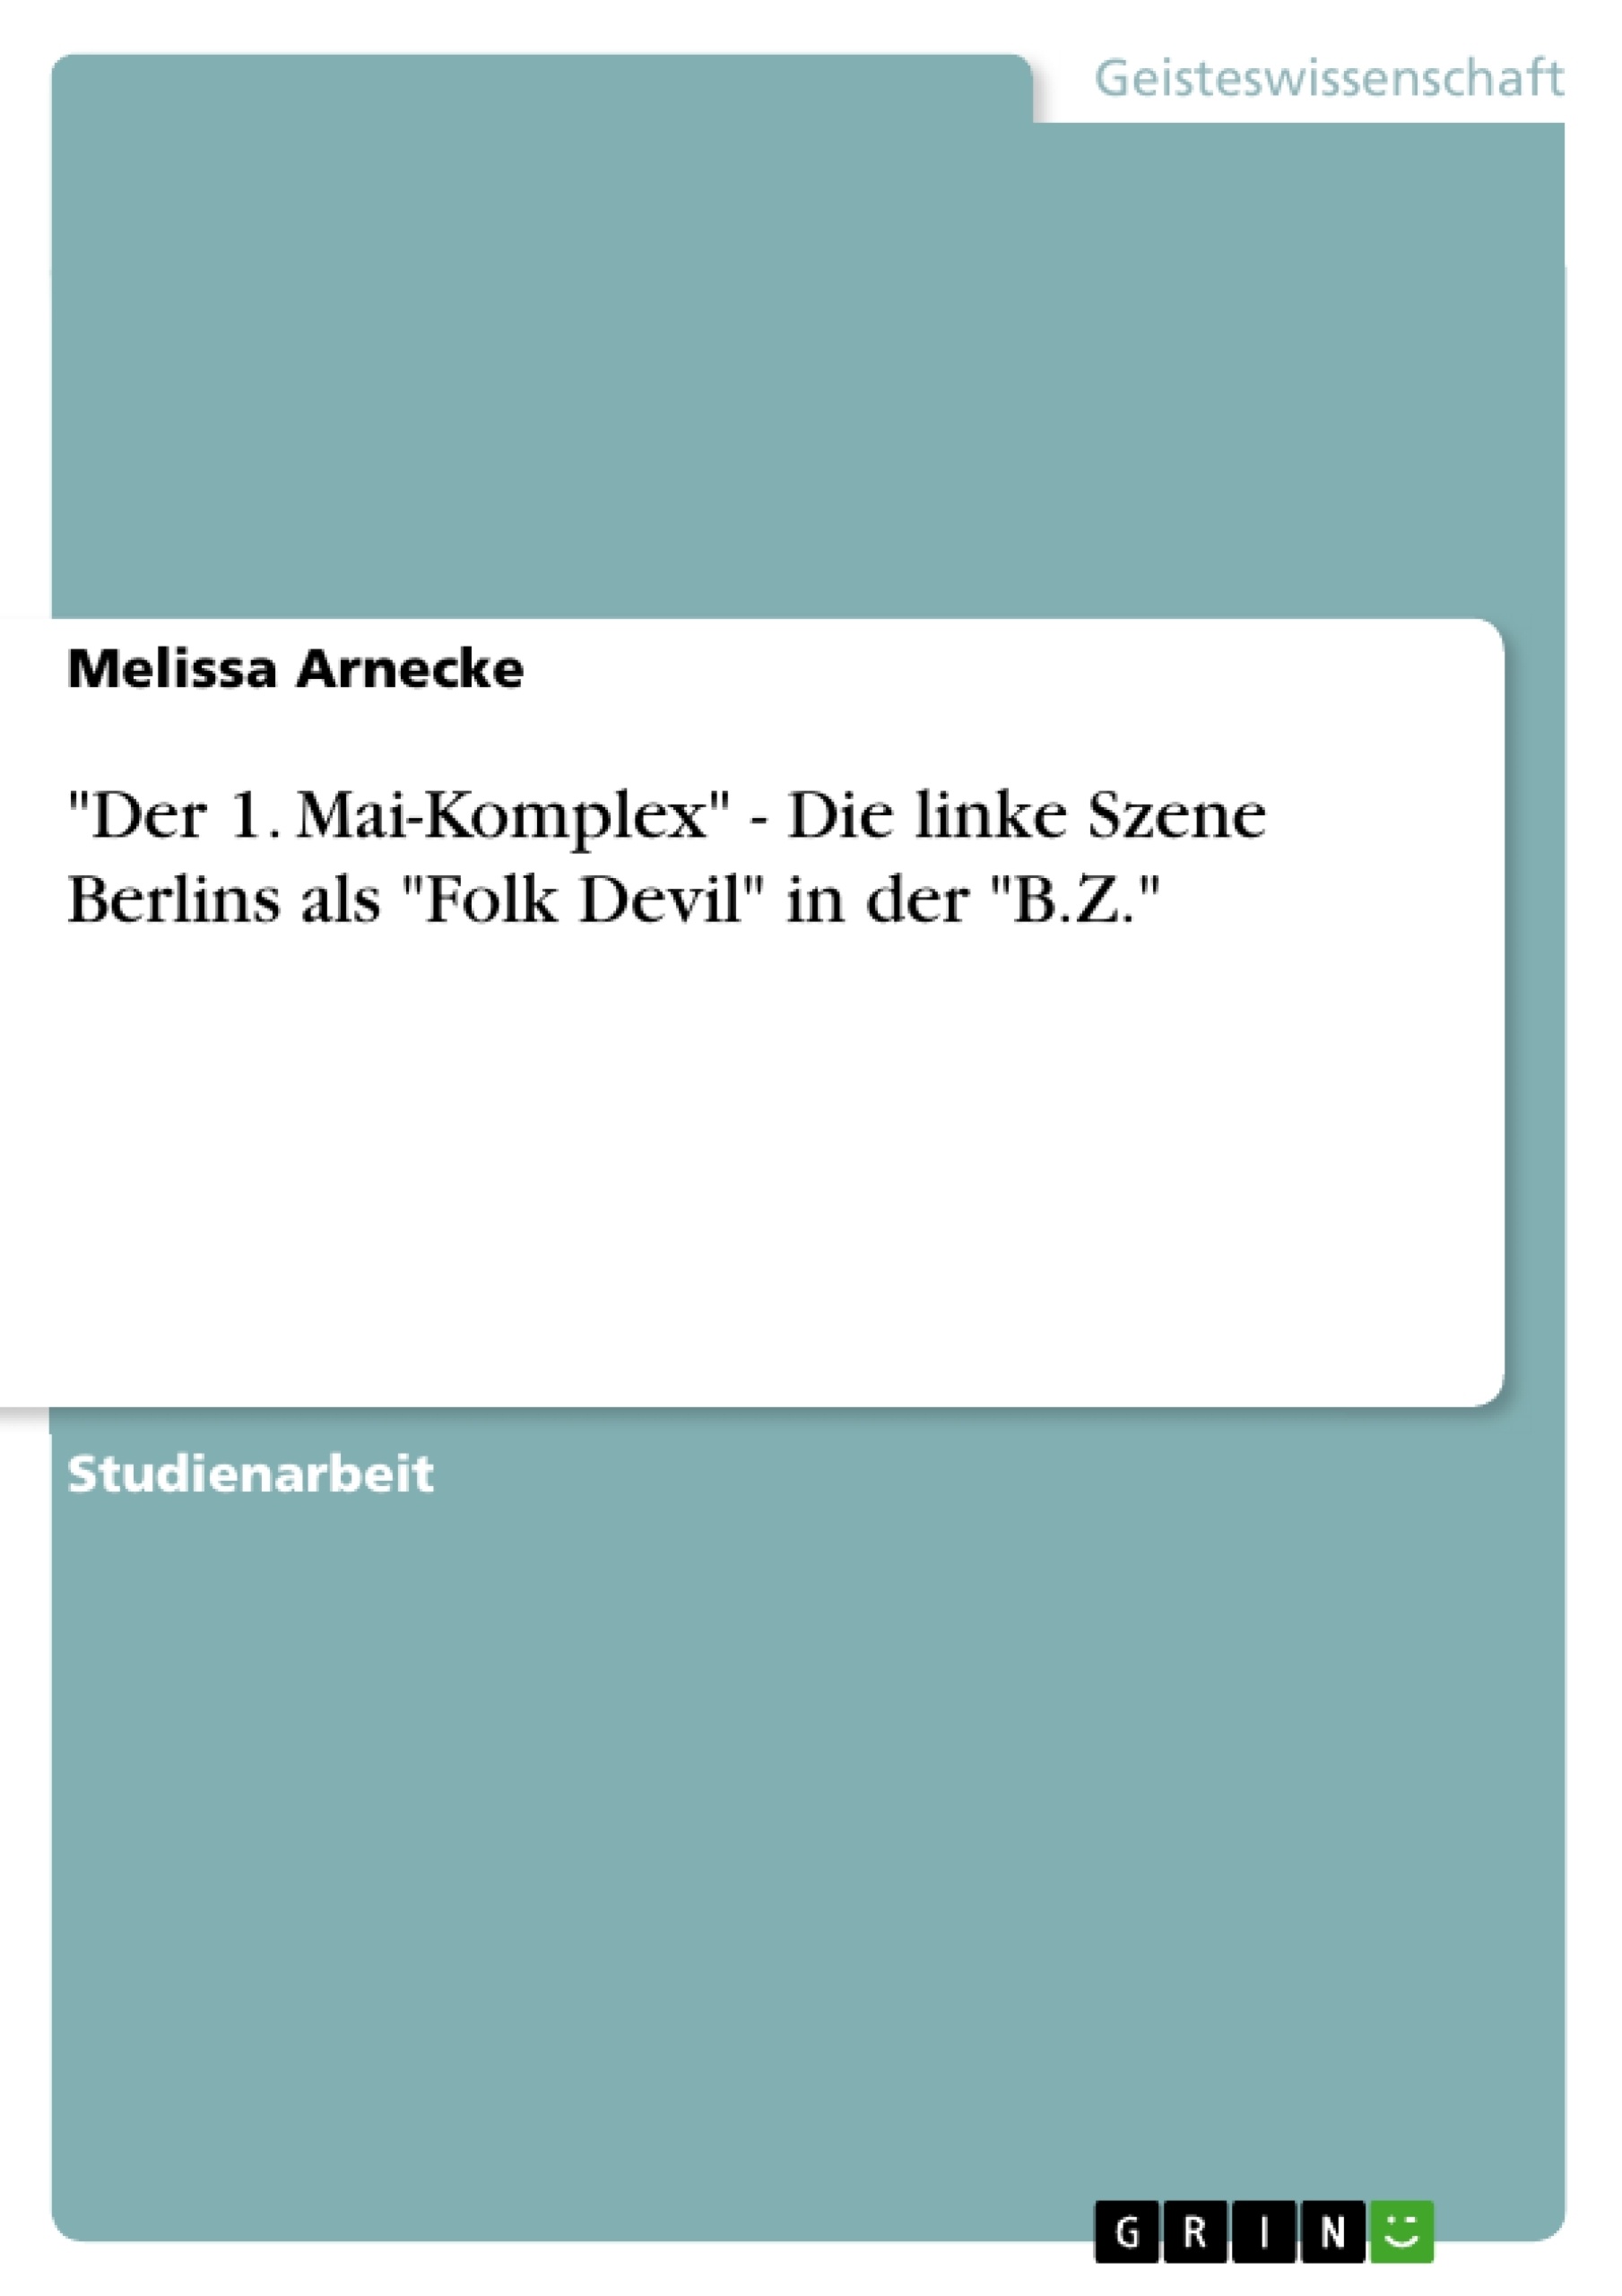 Título: "Der 1. Mai-Komplex" - Die linke Szene Berlins als "Folk Devil" in der "B.Z."